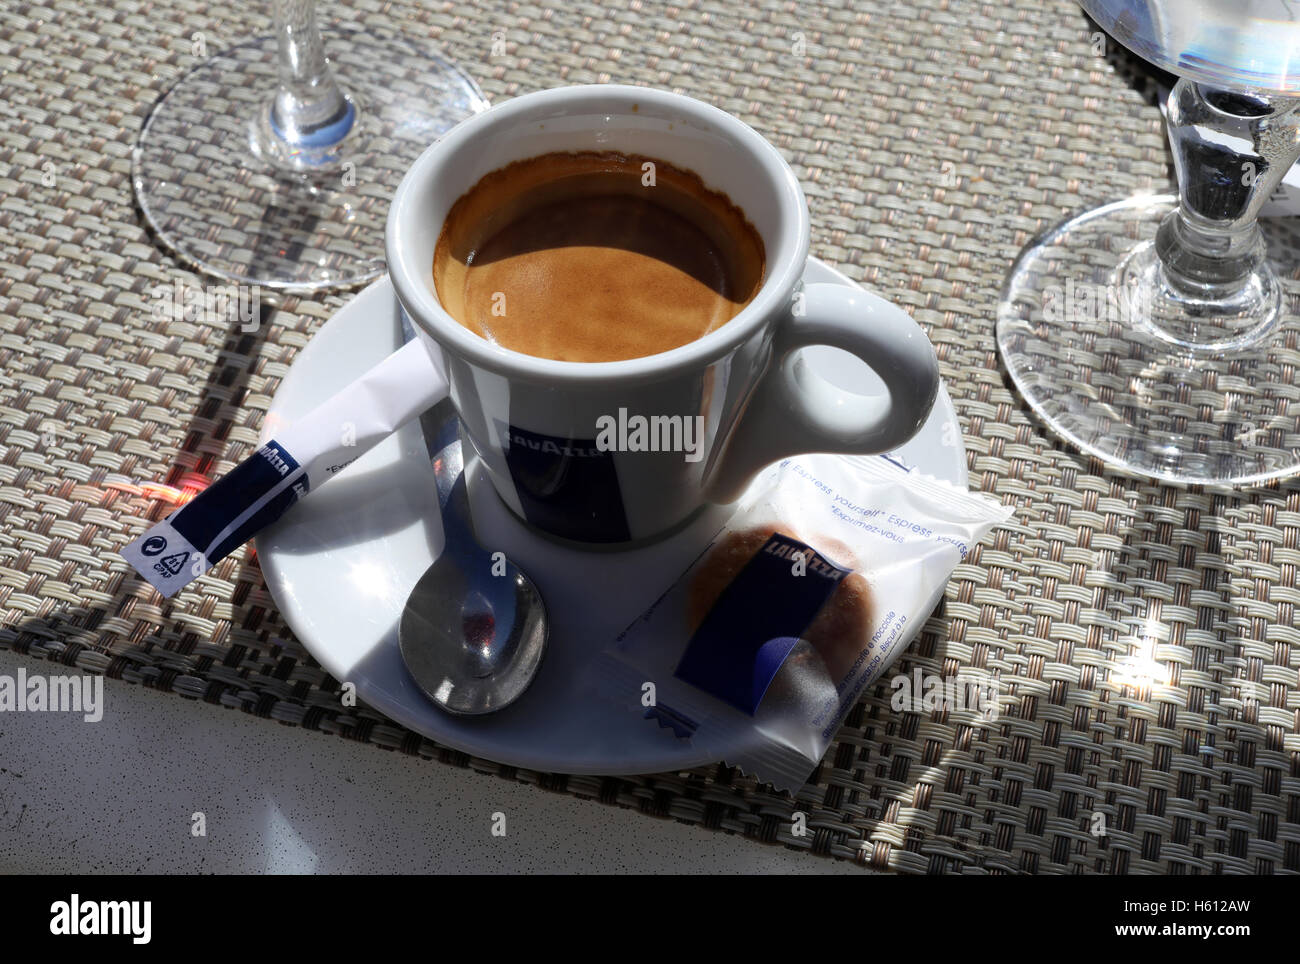 espresso cafe coffee French balck Lavazza branded cup sugar Stock Photo -  Alamy